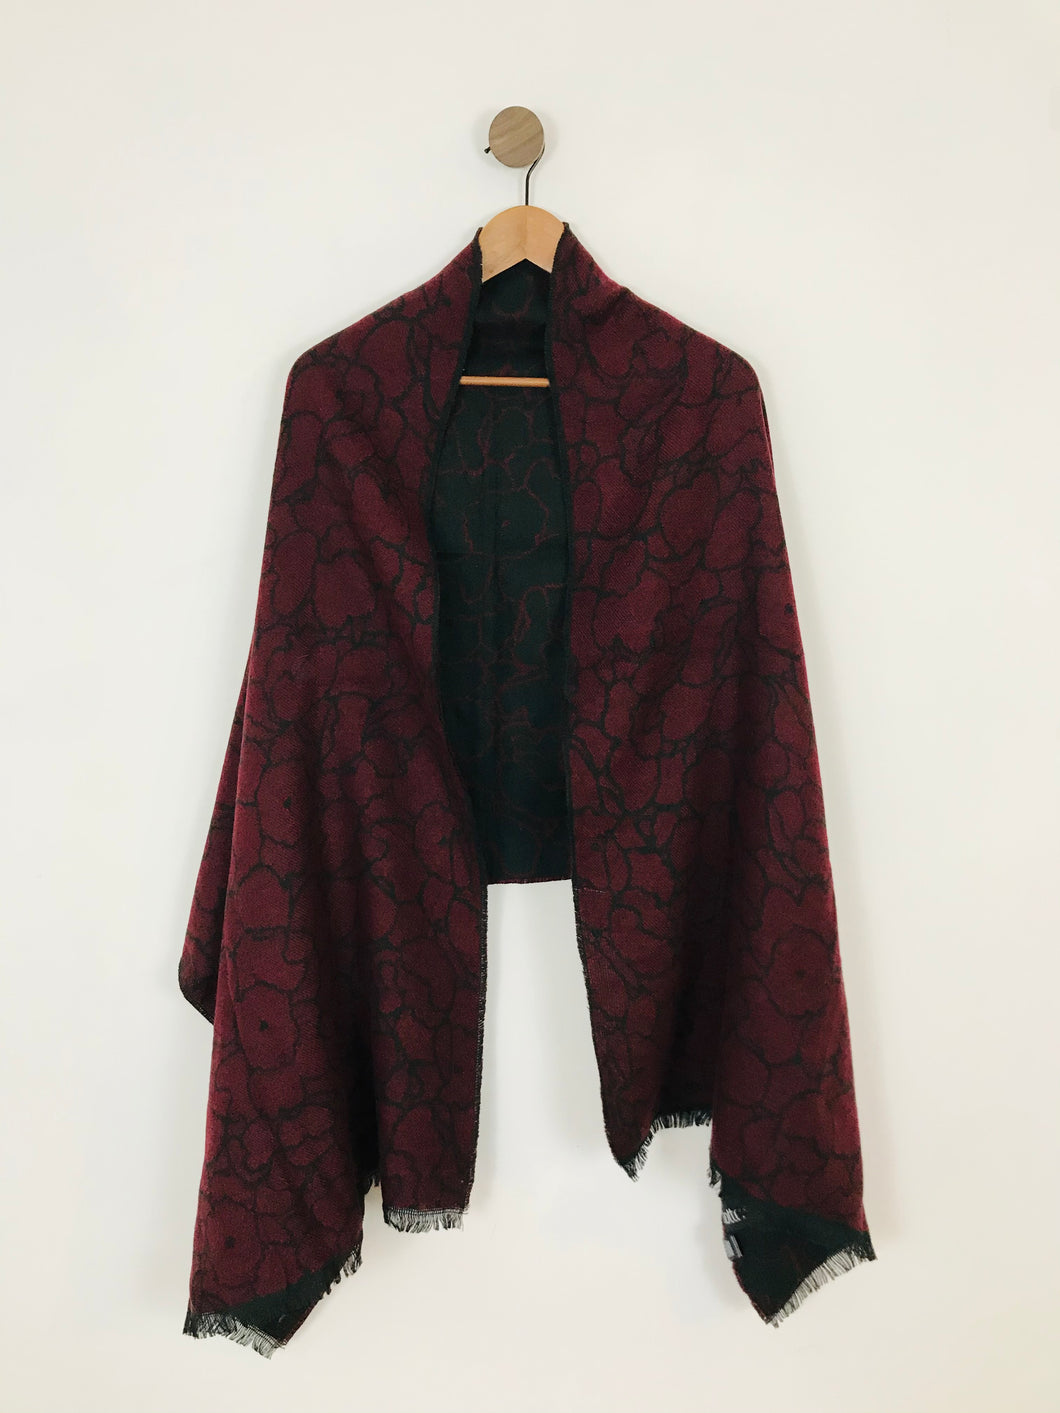 Hotter Women’s Intarsia Knit Shawl Wrap Scarf | Large | Burgundy Red Black